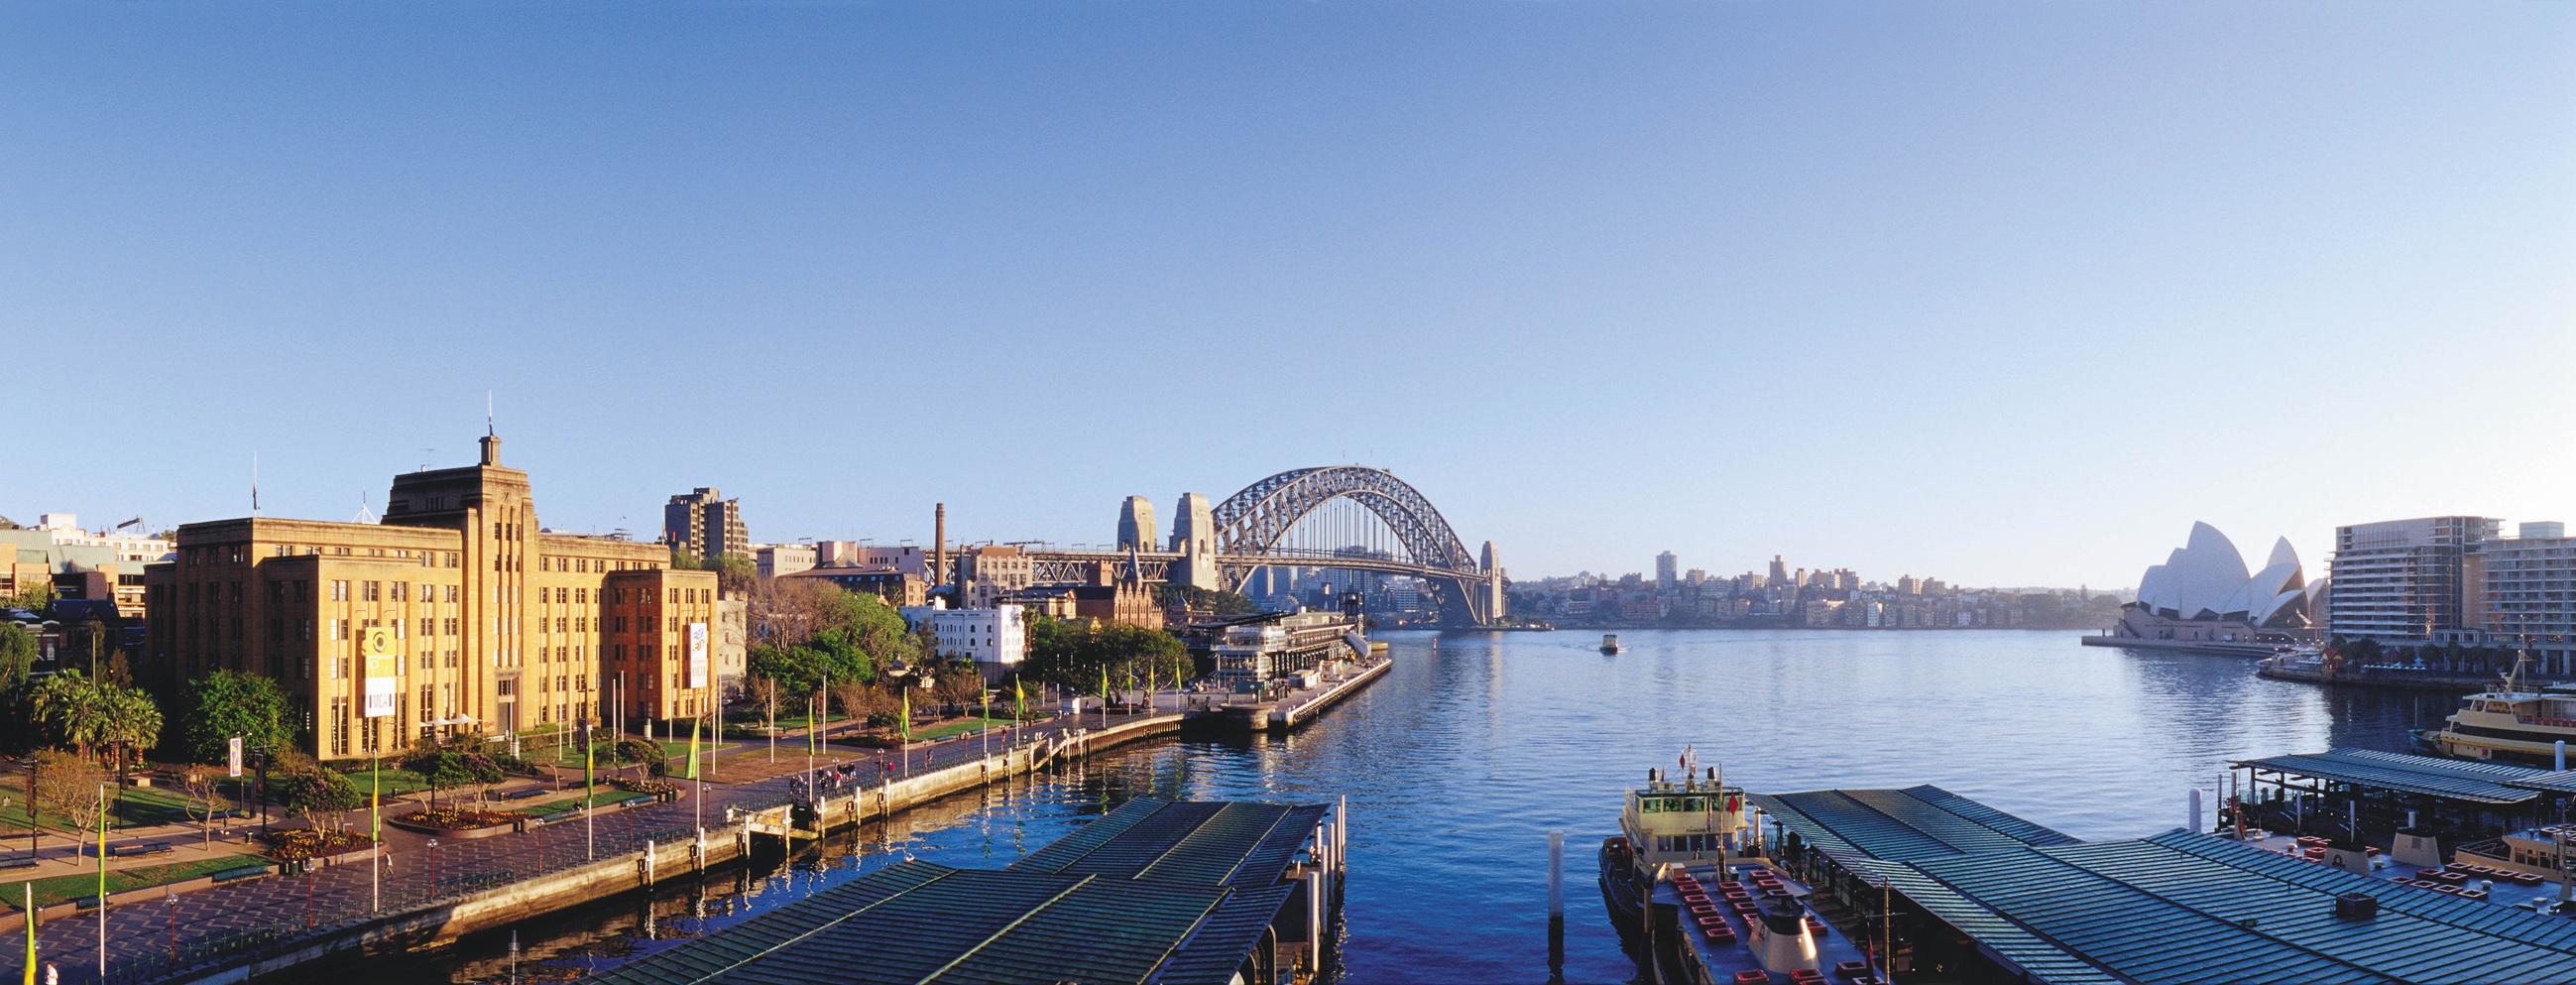 Pics Of Sydney